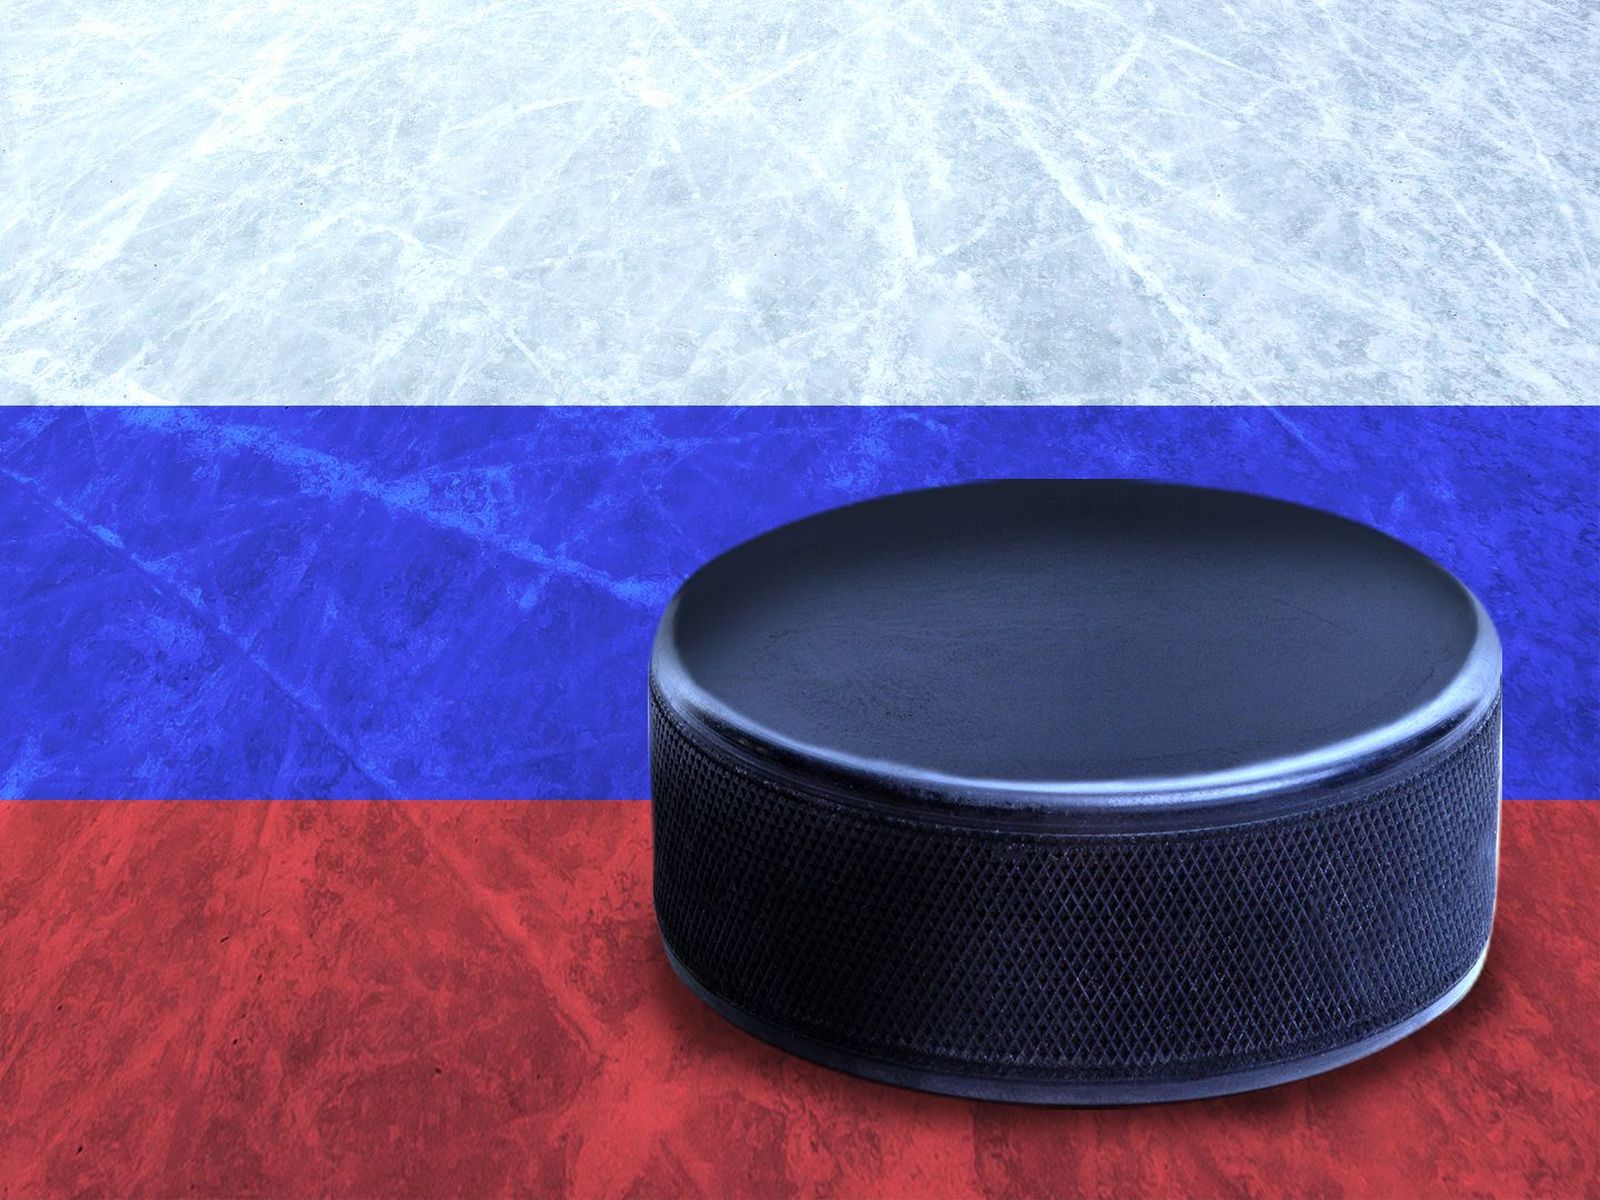 Russians star in NHL playoffs as nation wages war in Ukraine